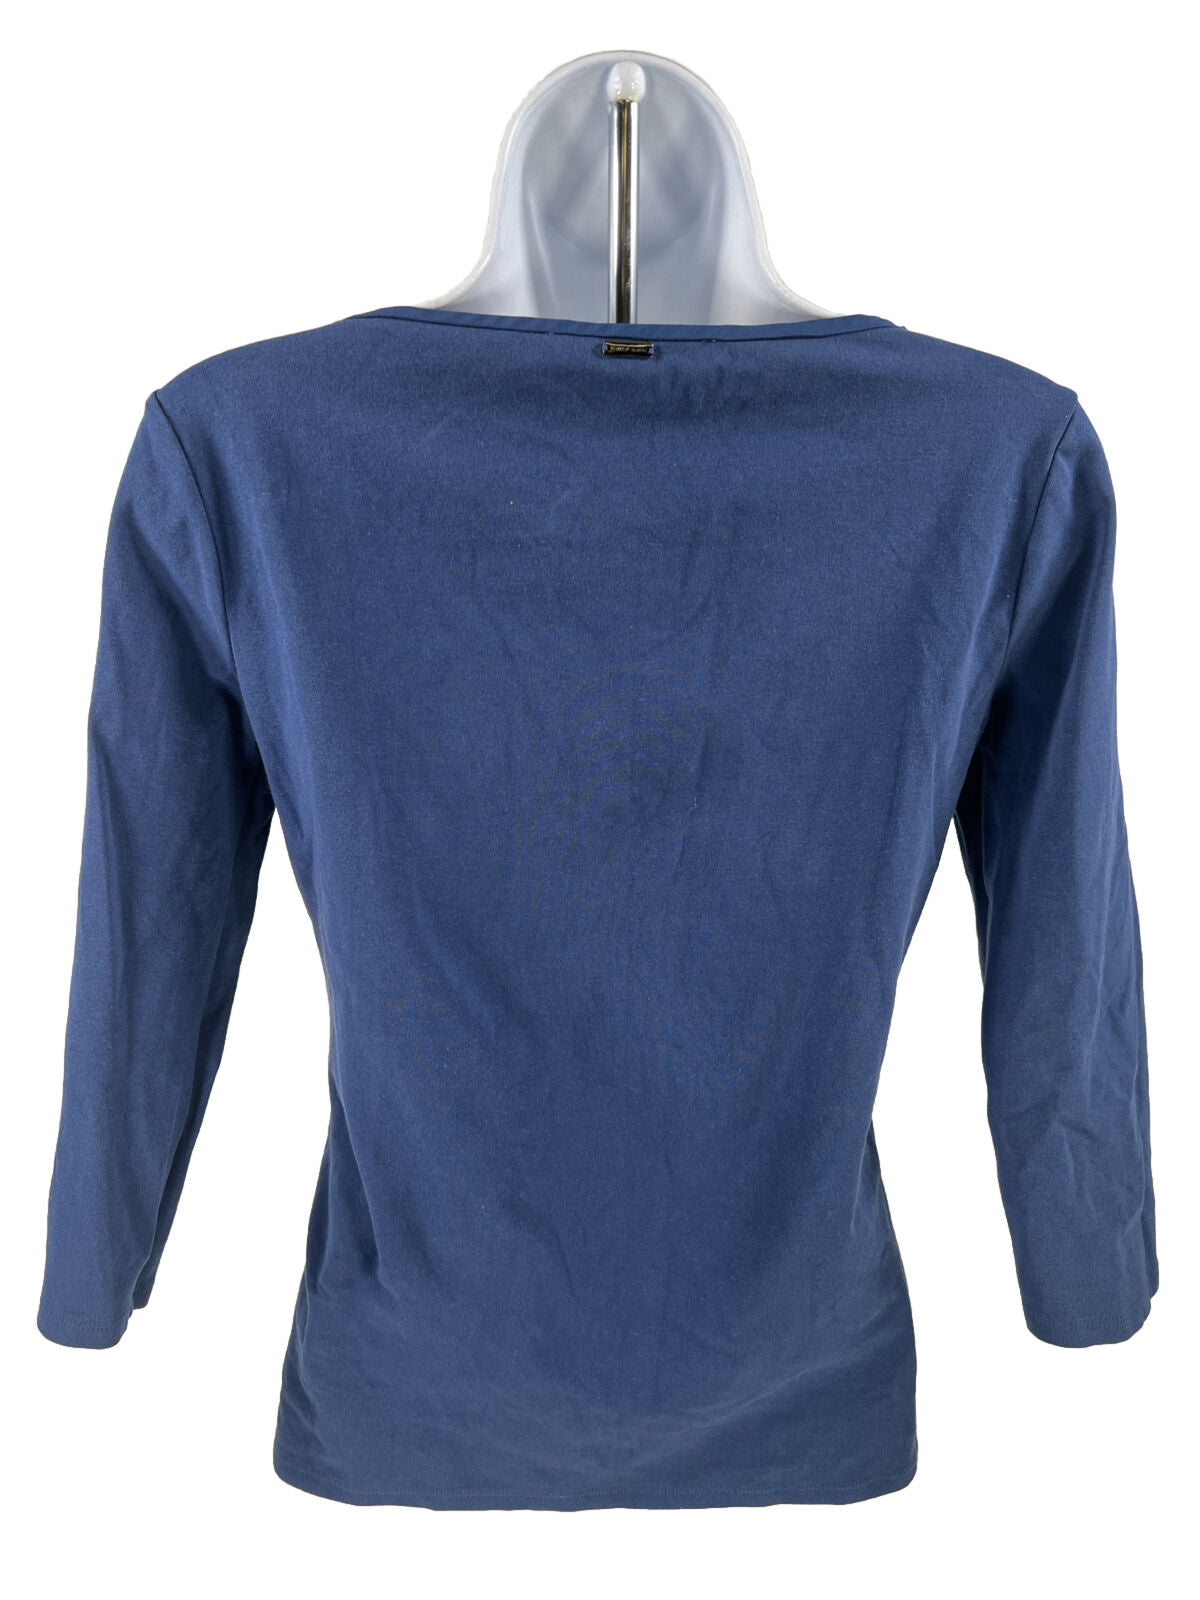 White House Black Market Women's Blue 3/4 Sleeve T-Shirt - XS